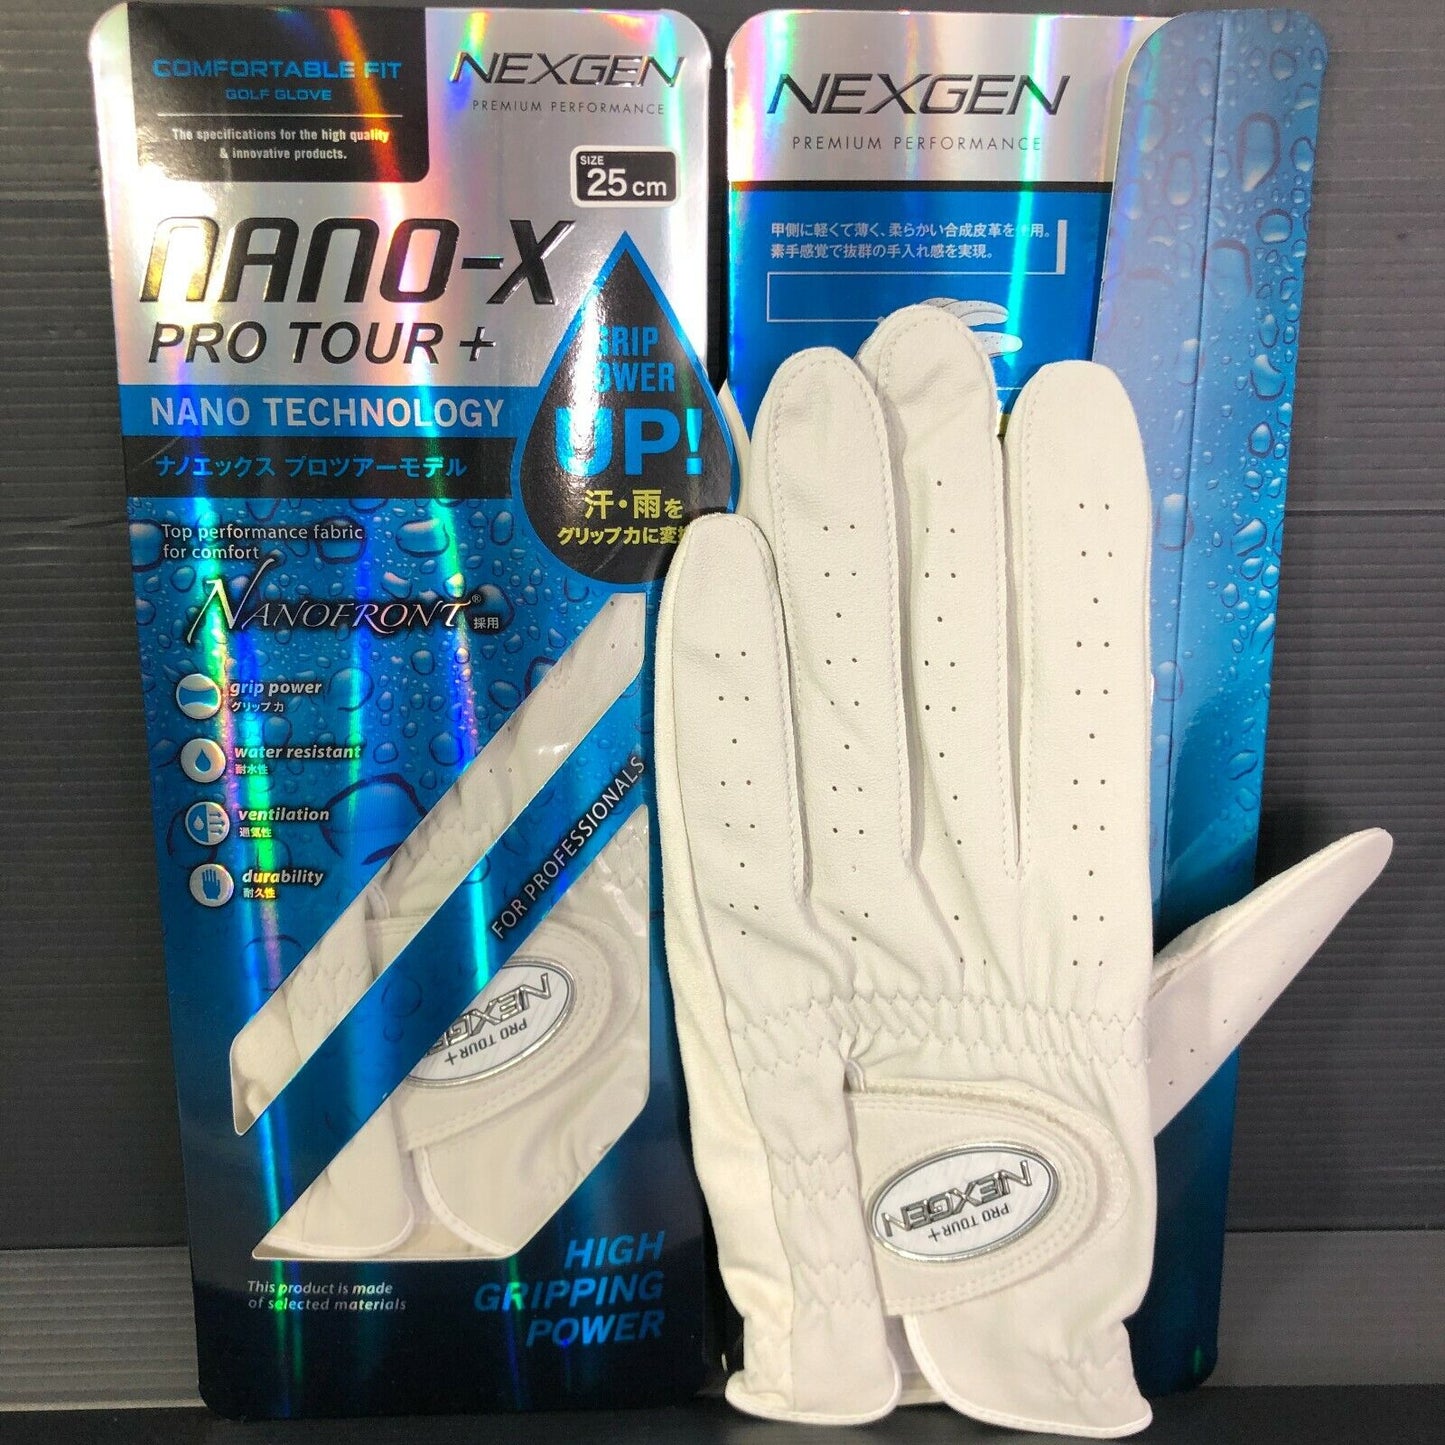 NEXGEN NGV-201 GOLF Glove Nano X Pro Tour +, New Model! GN001N